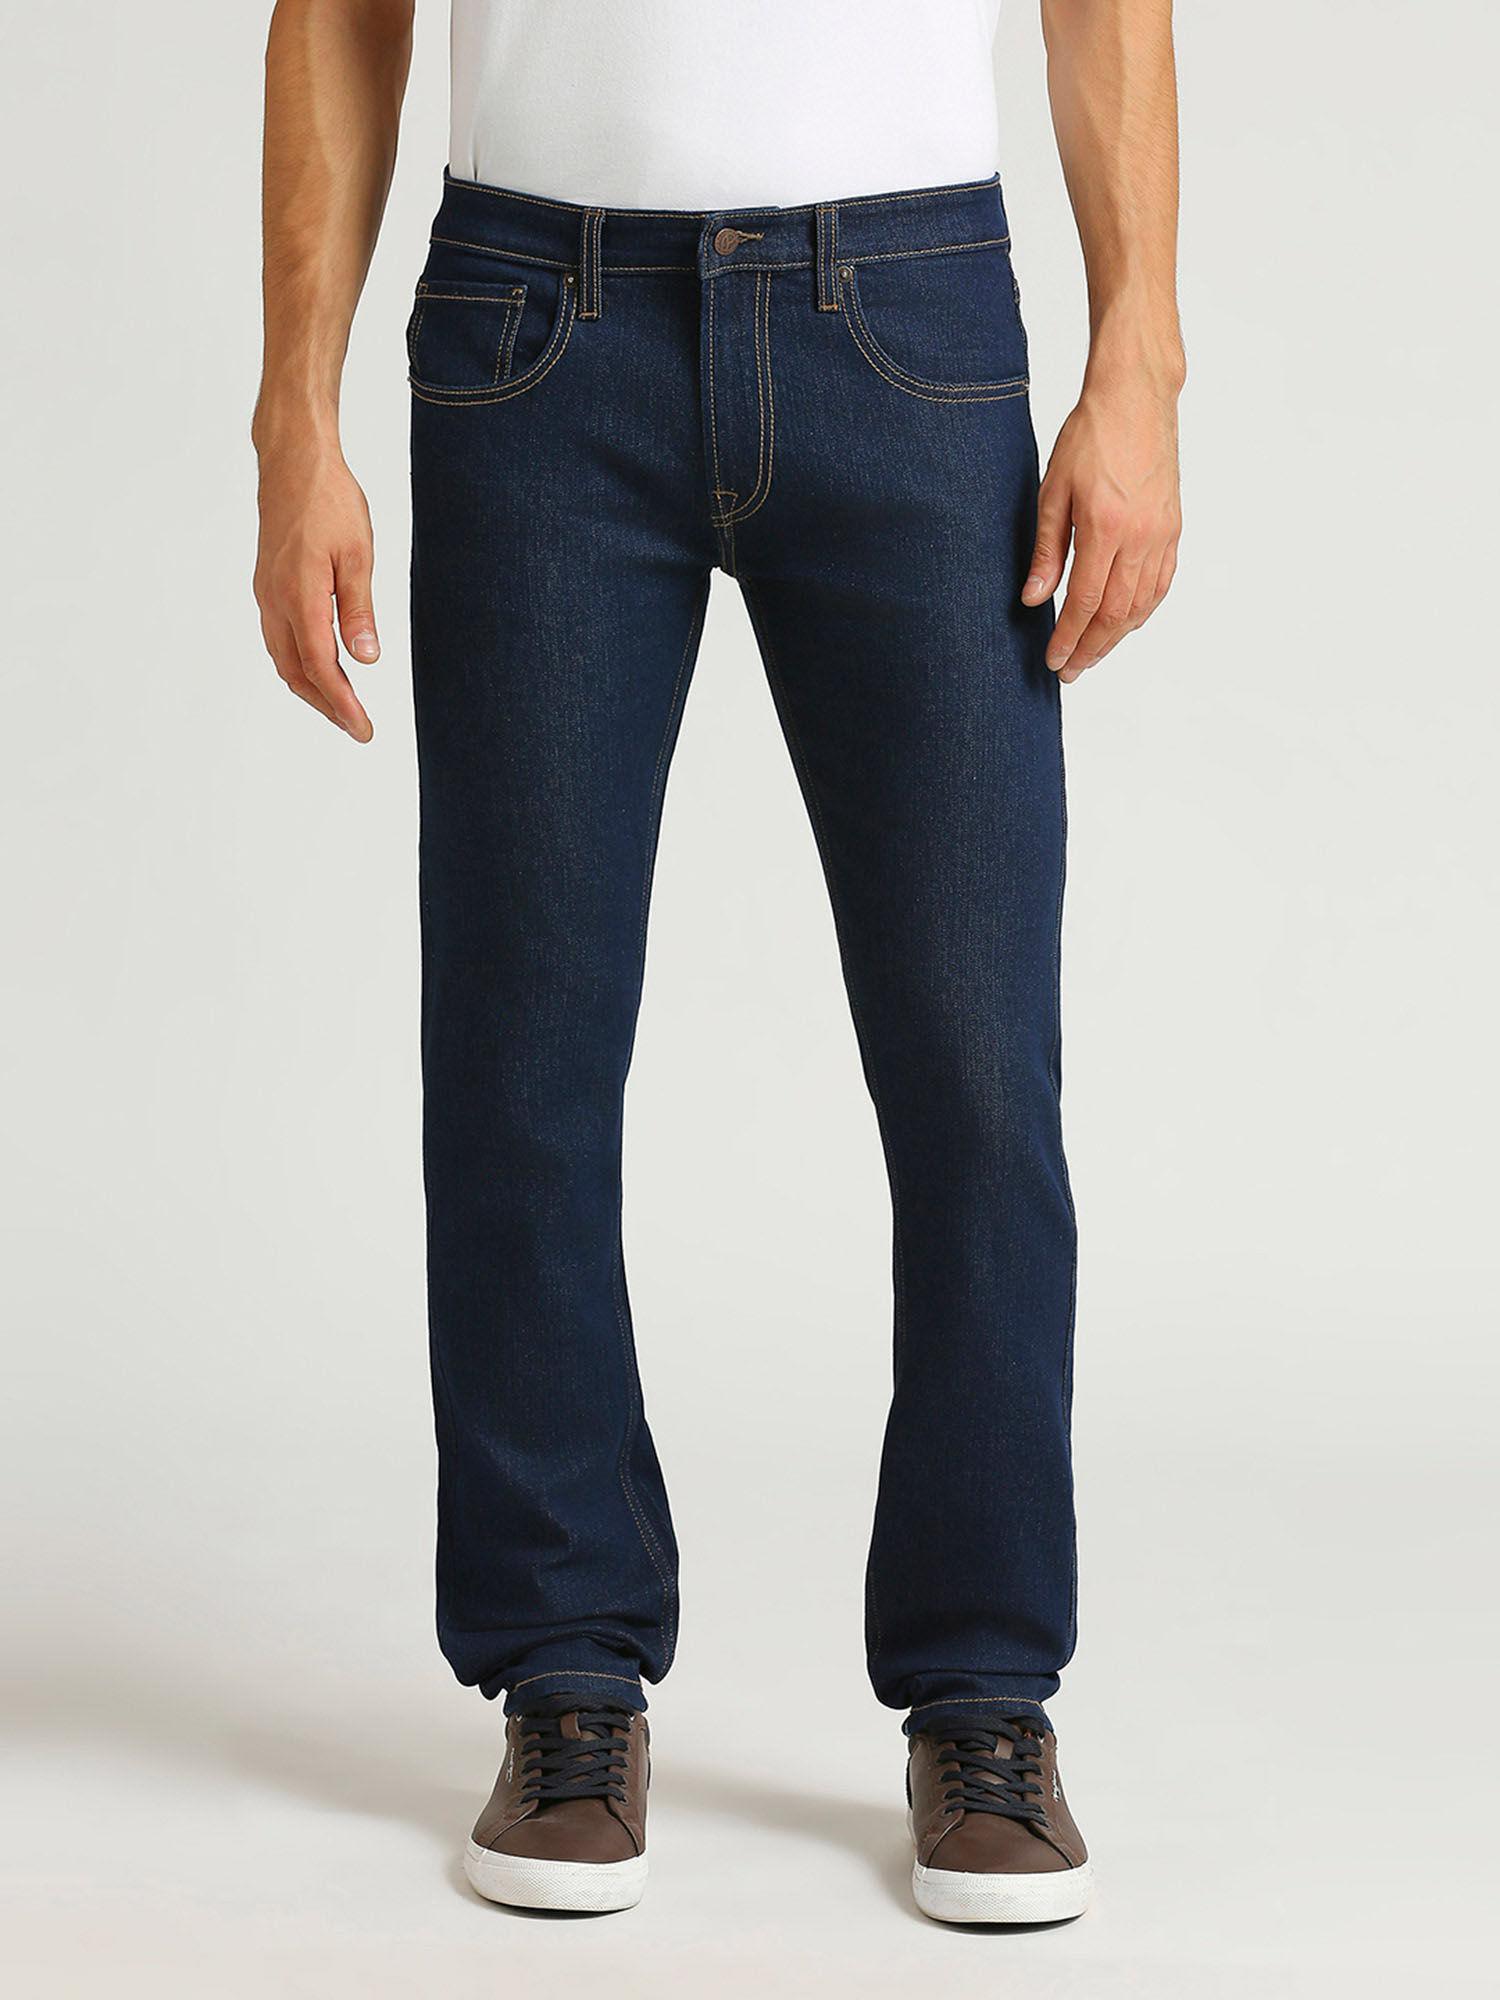 vapour raw navy blue mid rise slim fit jeans